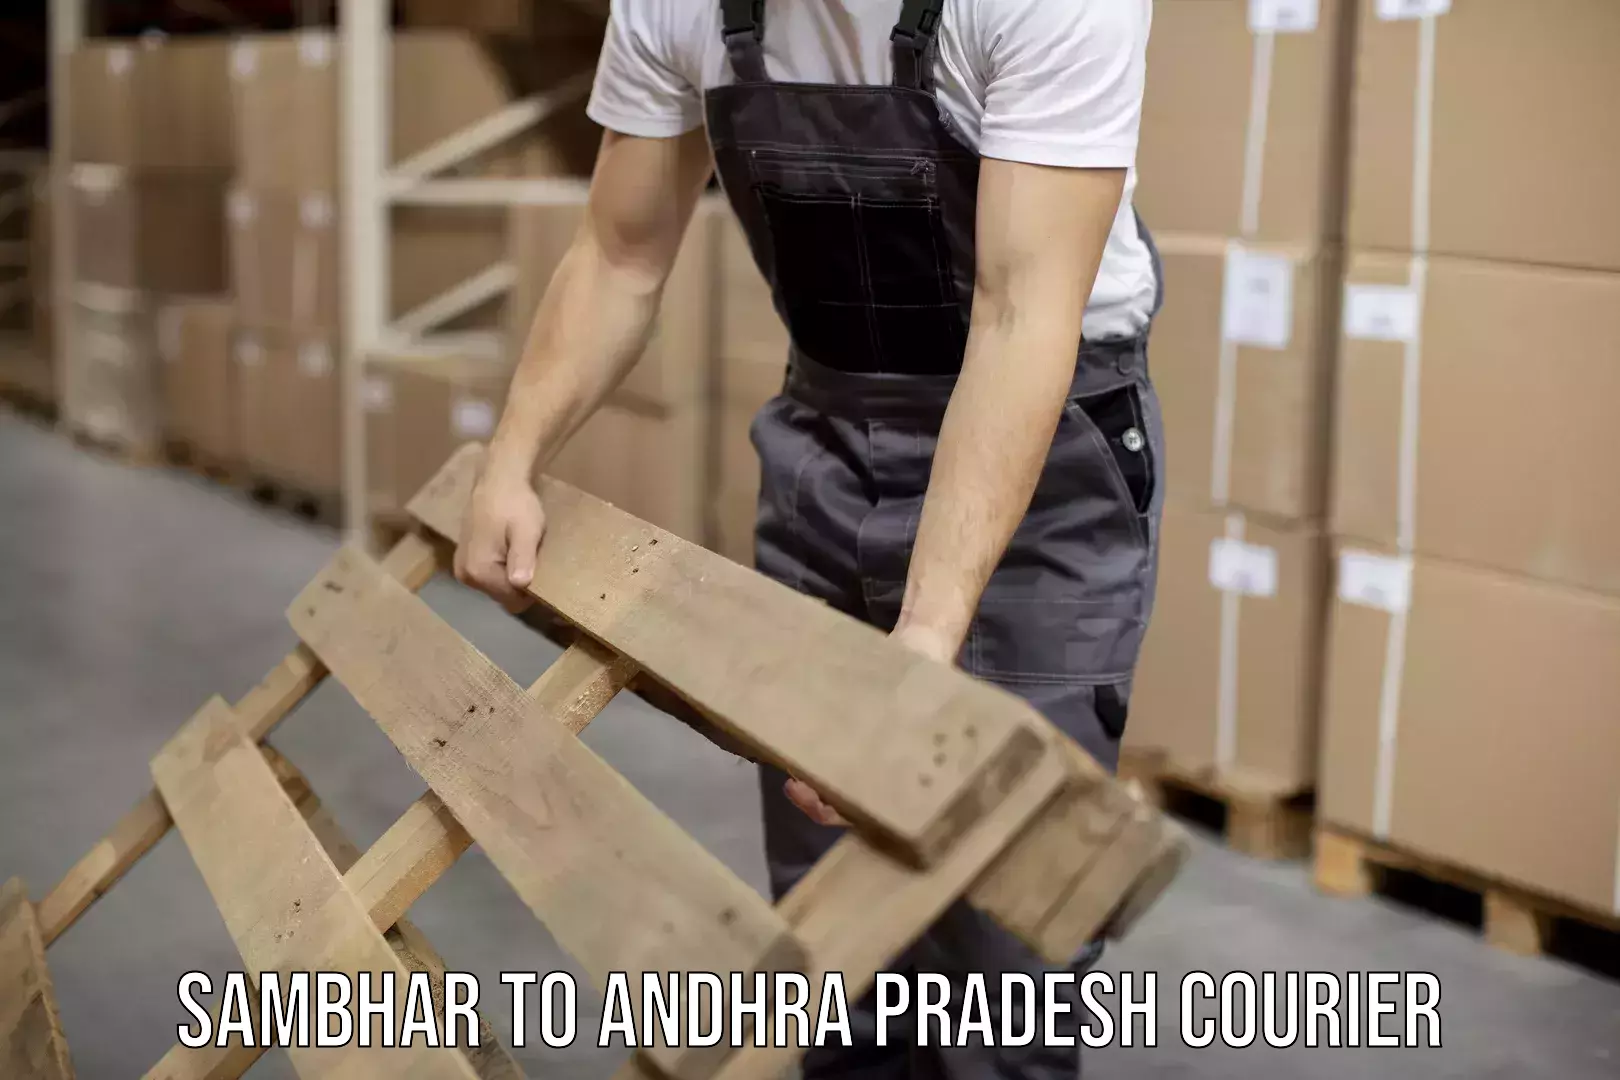 Cash on delivery service Sambhar to Andhra Pradesh